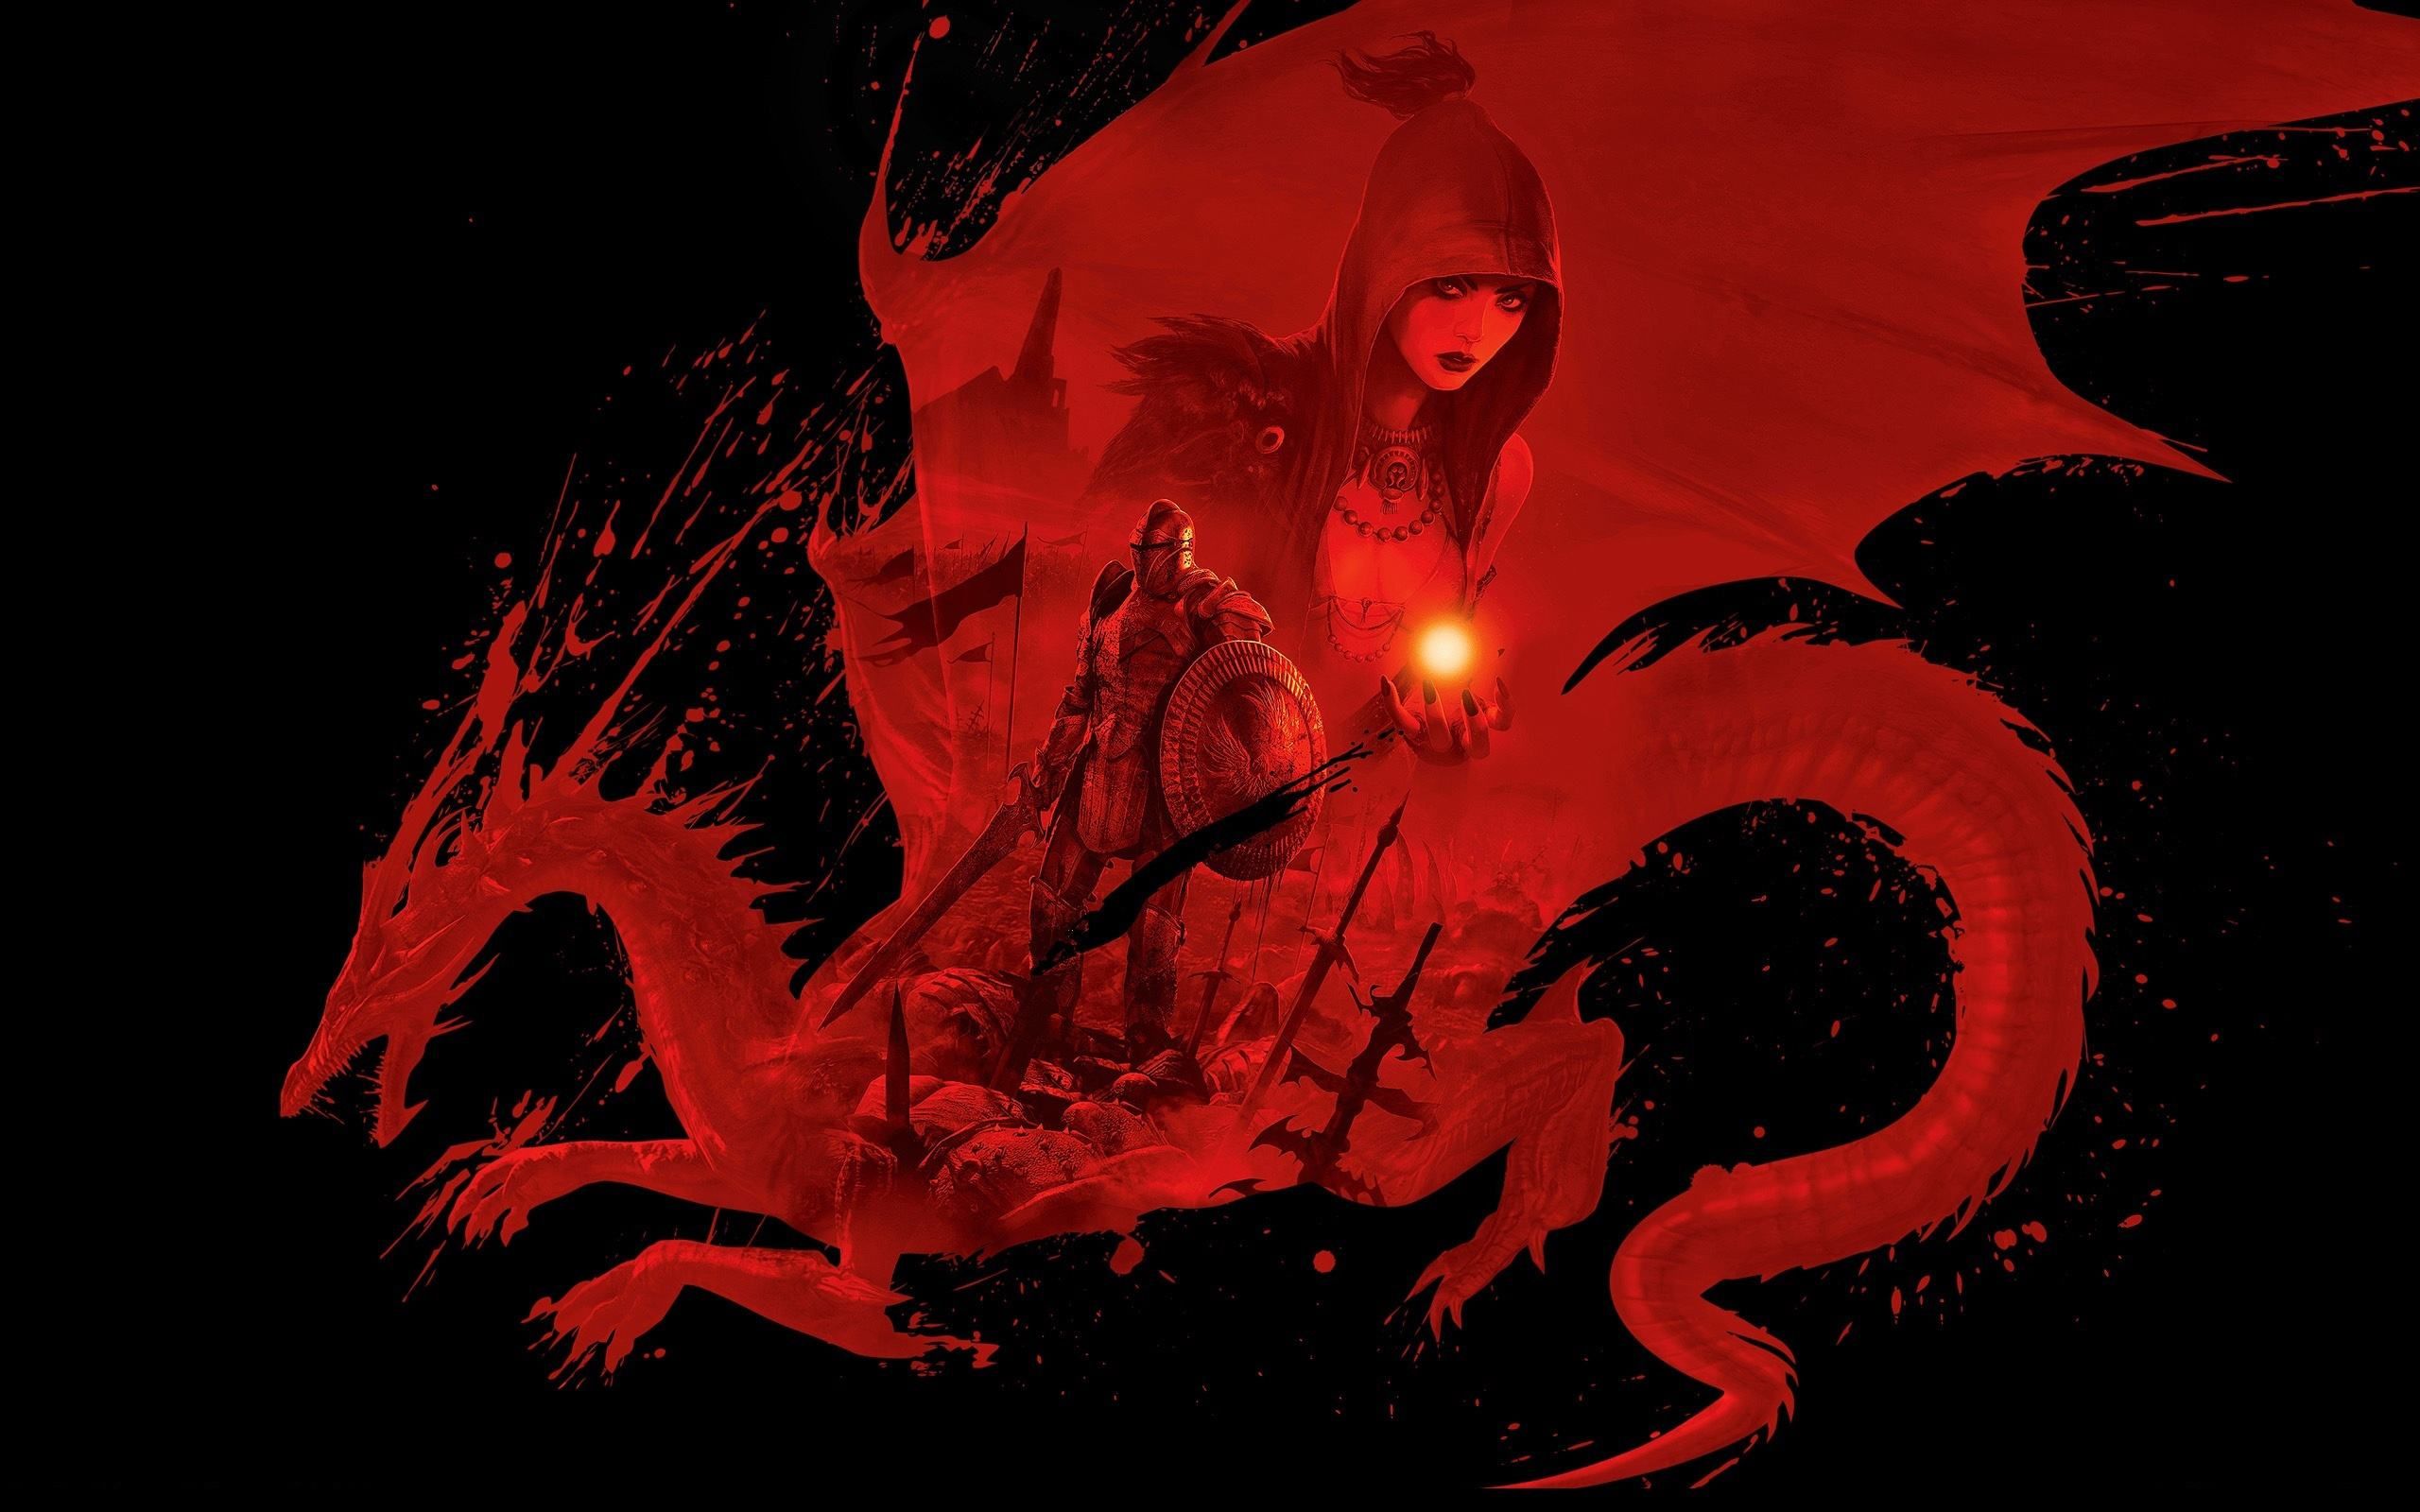 Download Wallpaper Dragon Age Origins (dragon, Red, Dragon Age) Fo 2560x1600, Wallpaper13.com